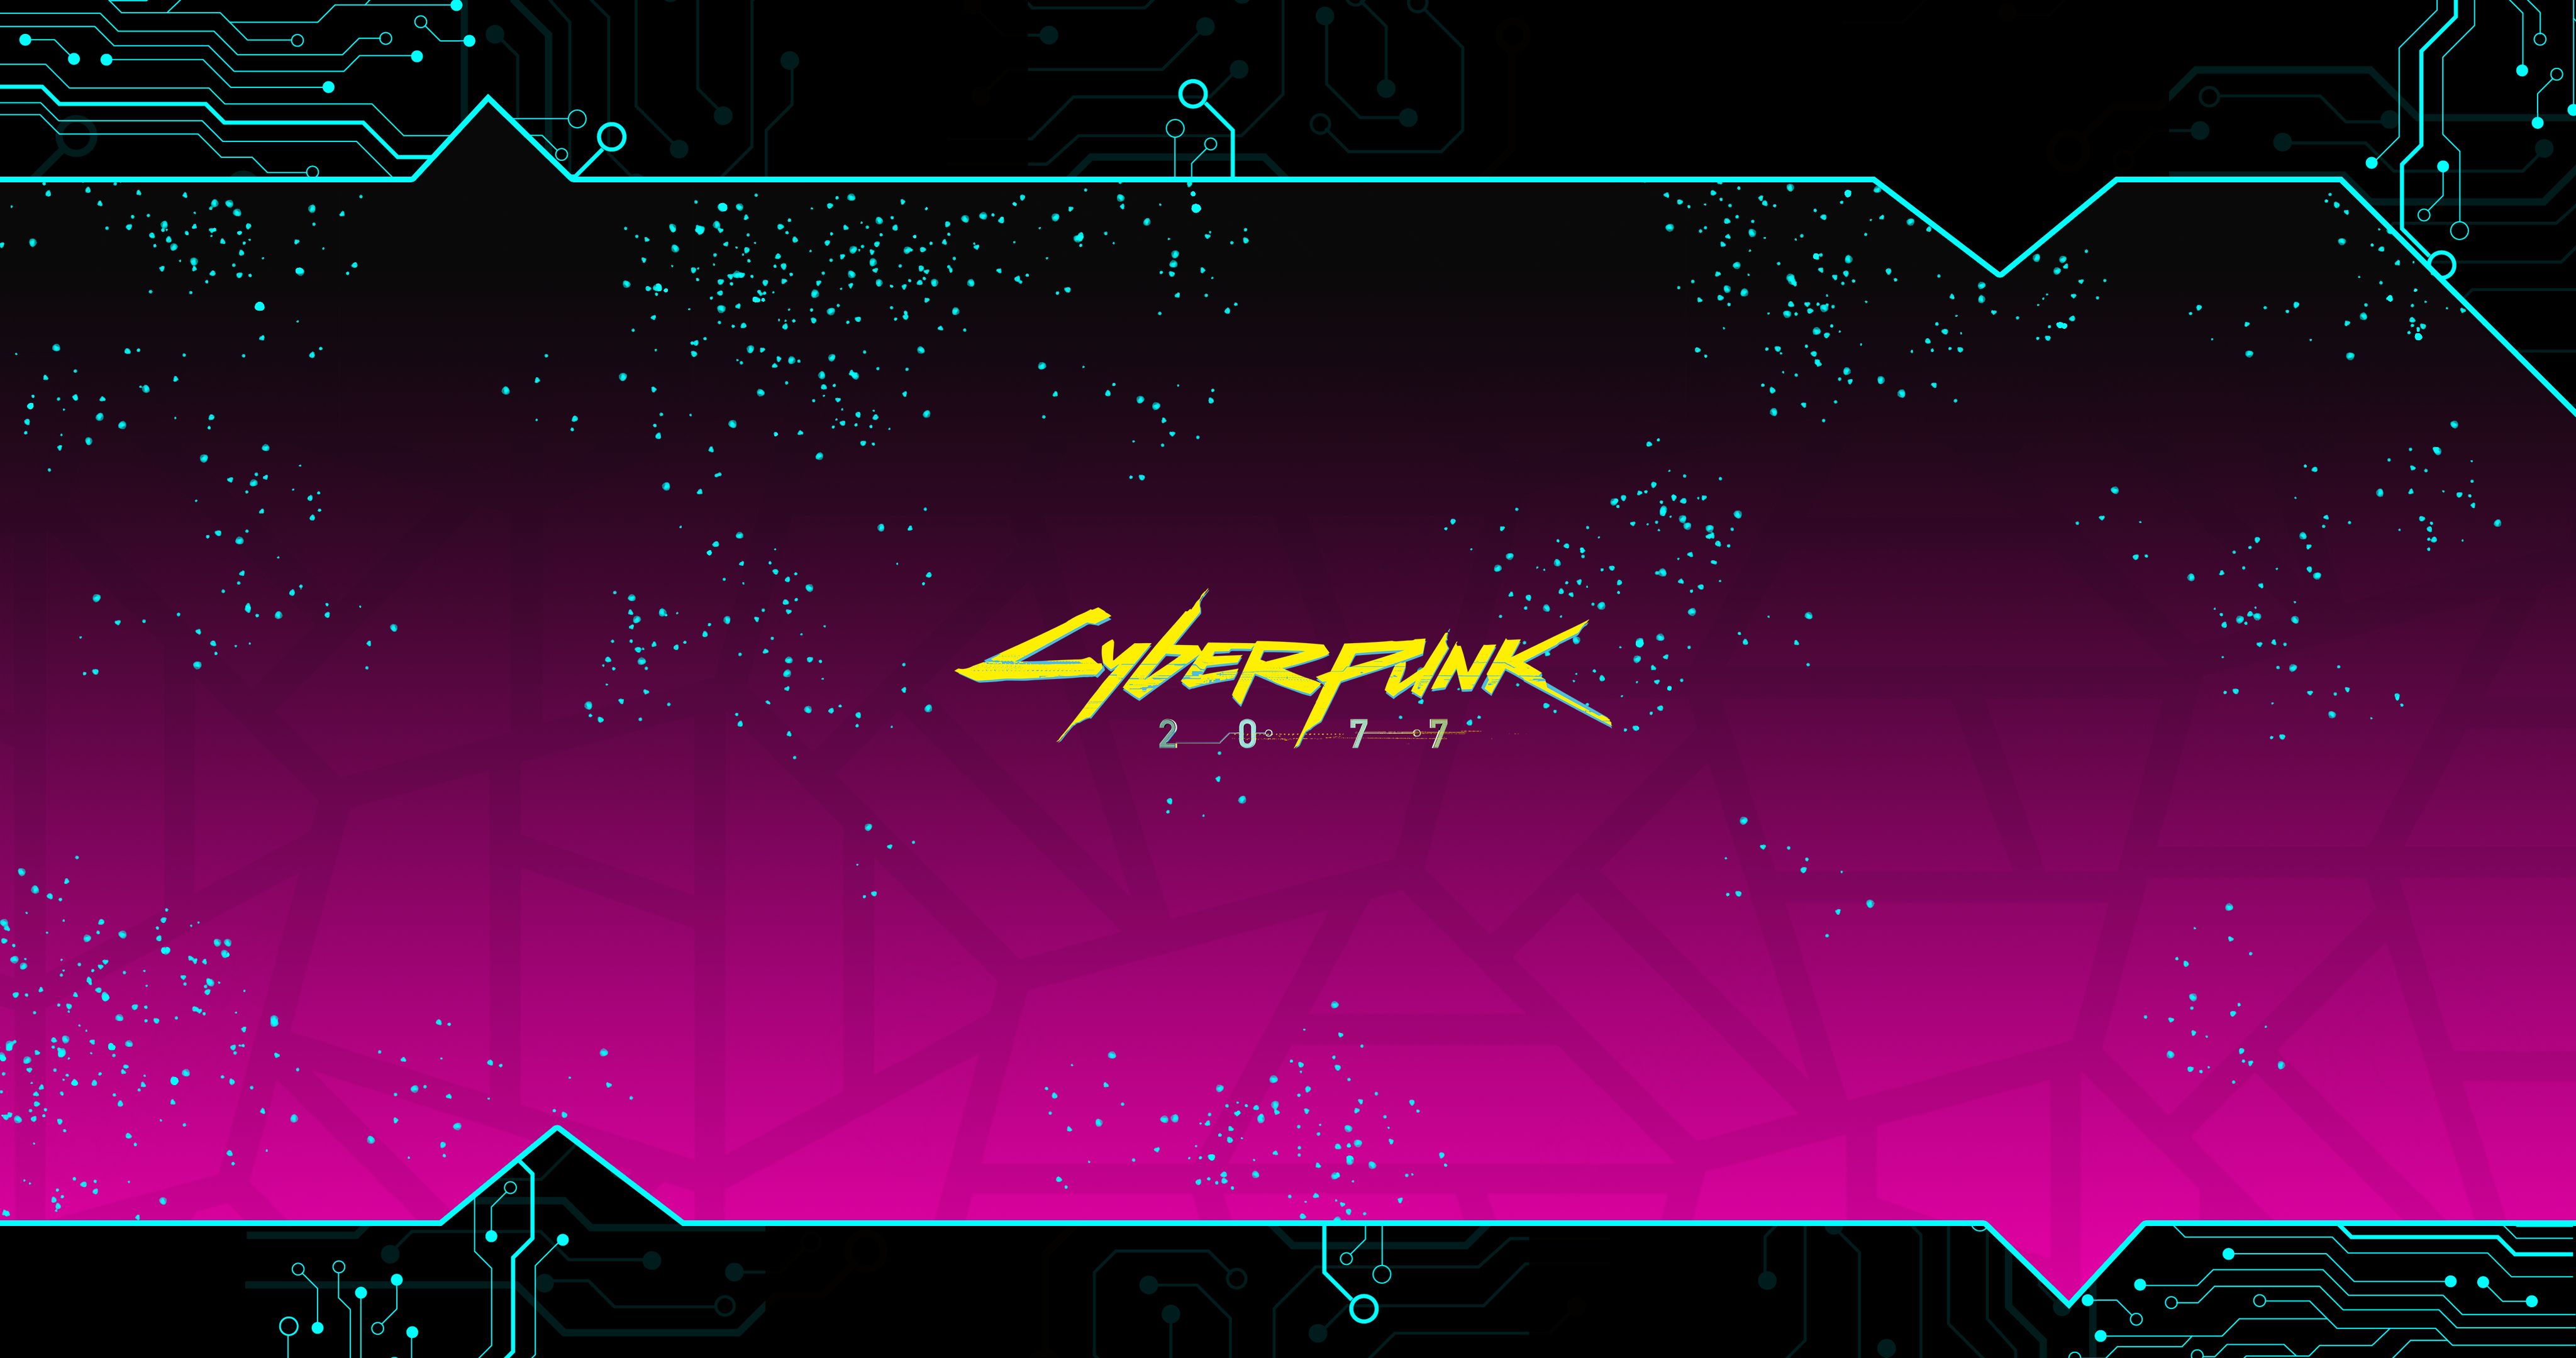 Cyberpunk 2077 Background Logo Wallpaper, HD Games 4K Wallpaper